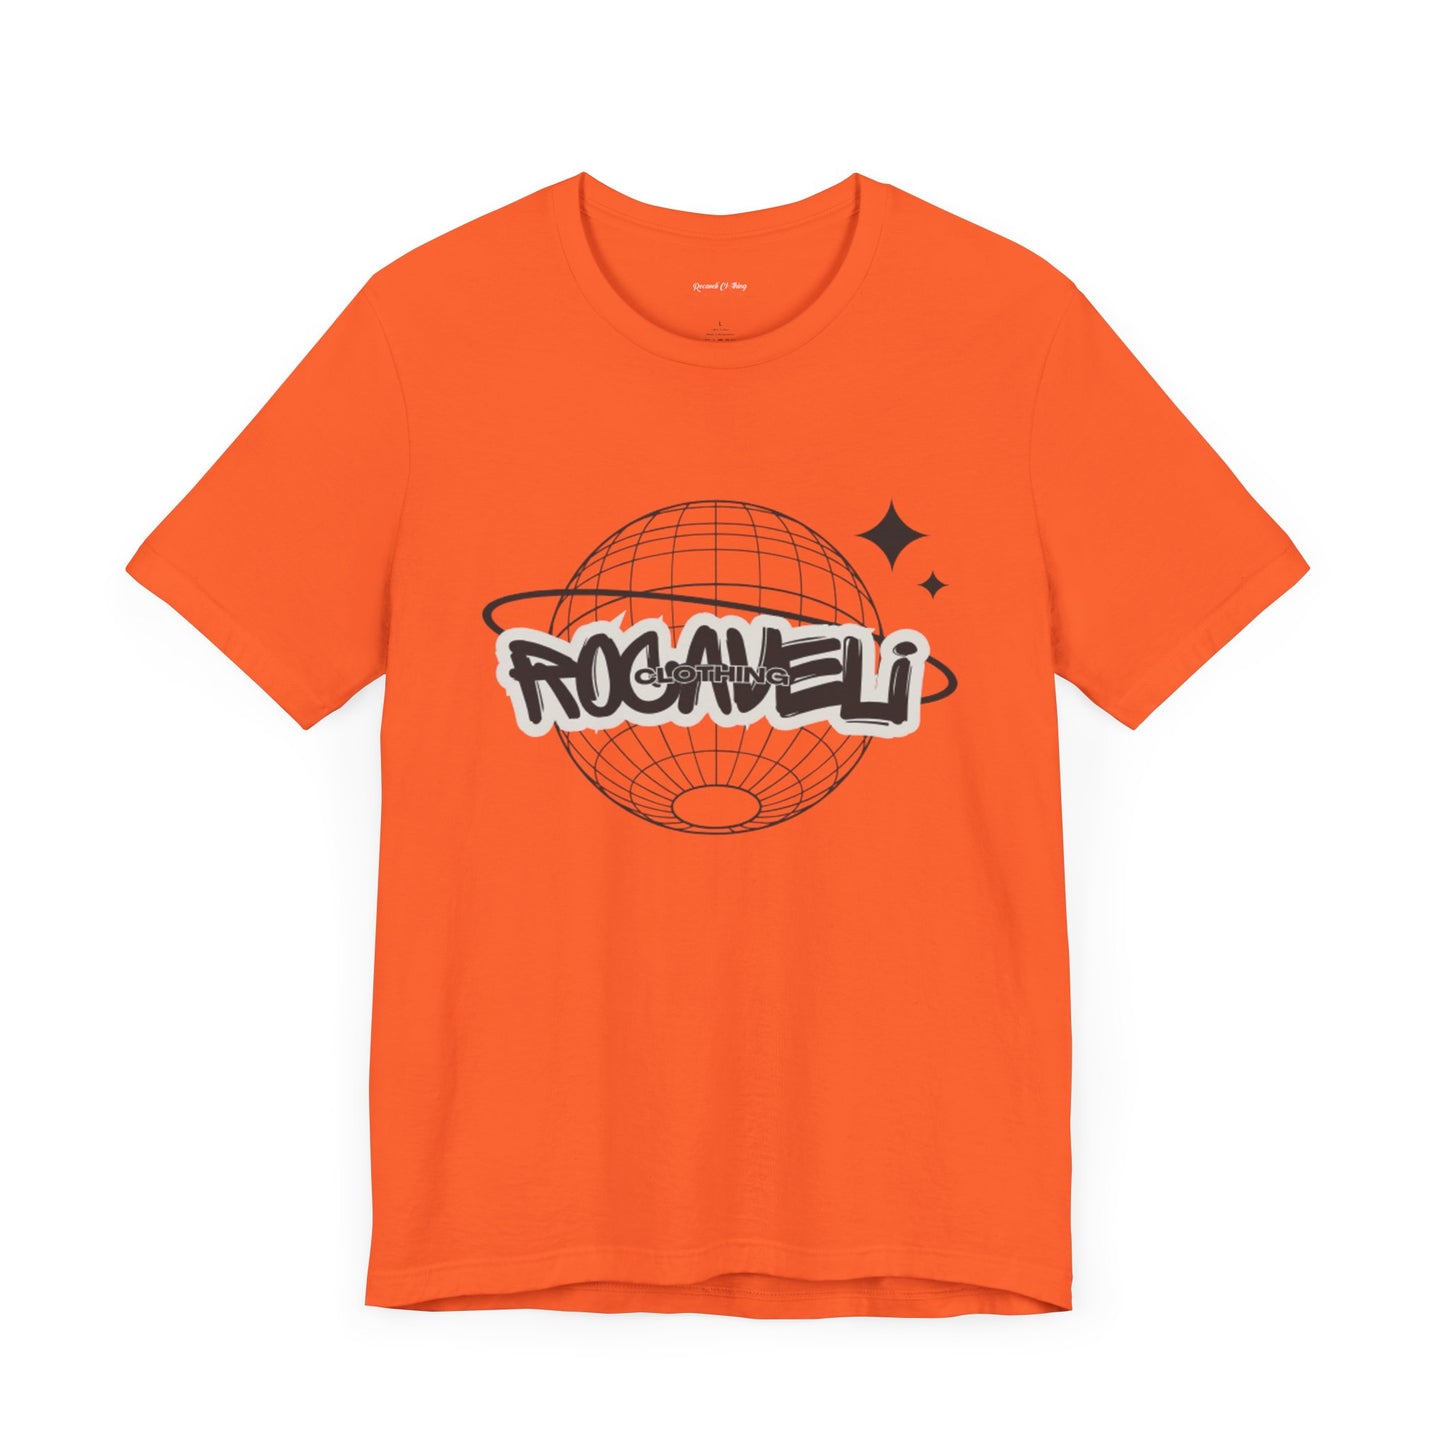 rocaveli clothing global edition Unisex Jersey Short Sleeve Tee